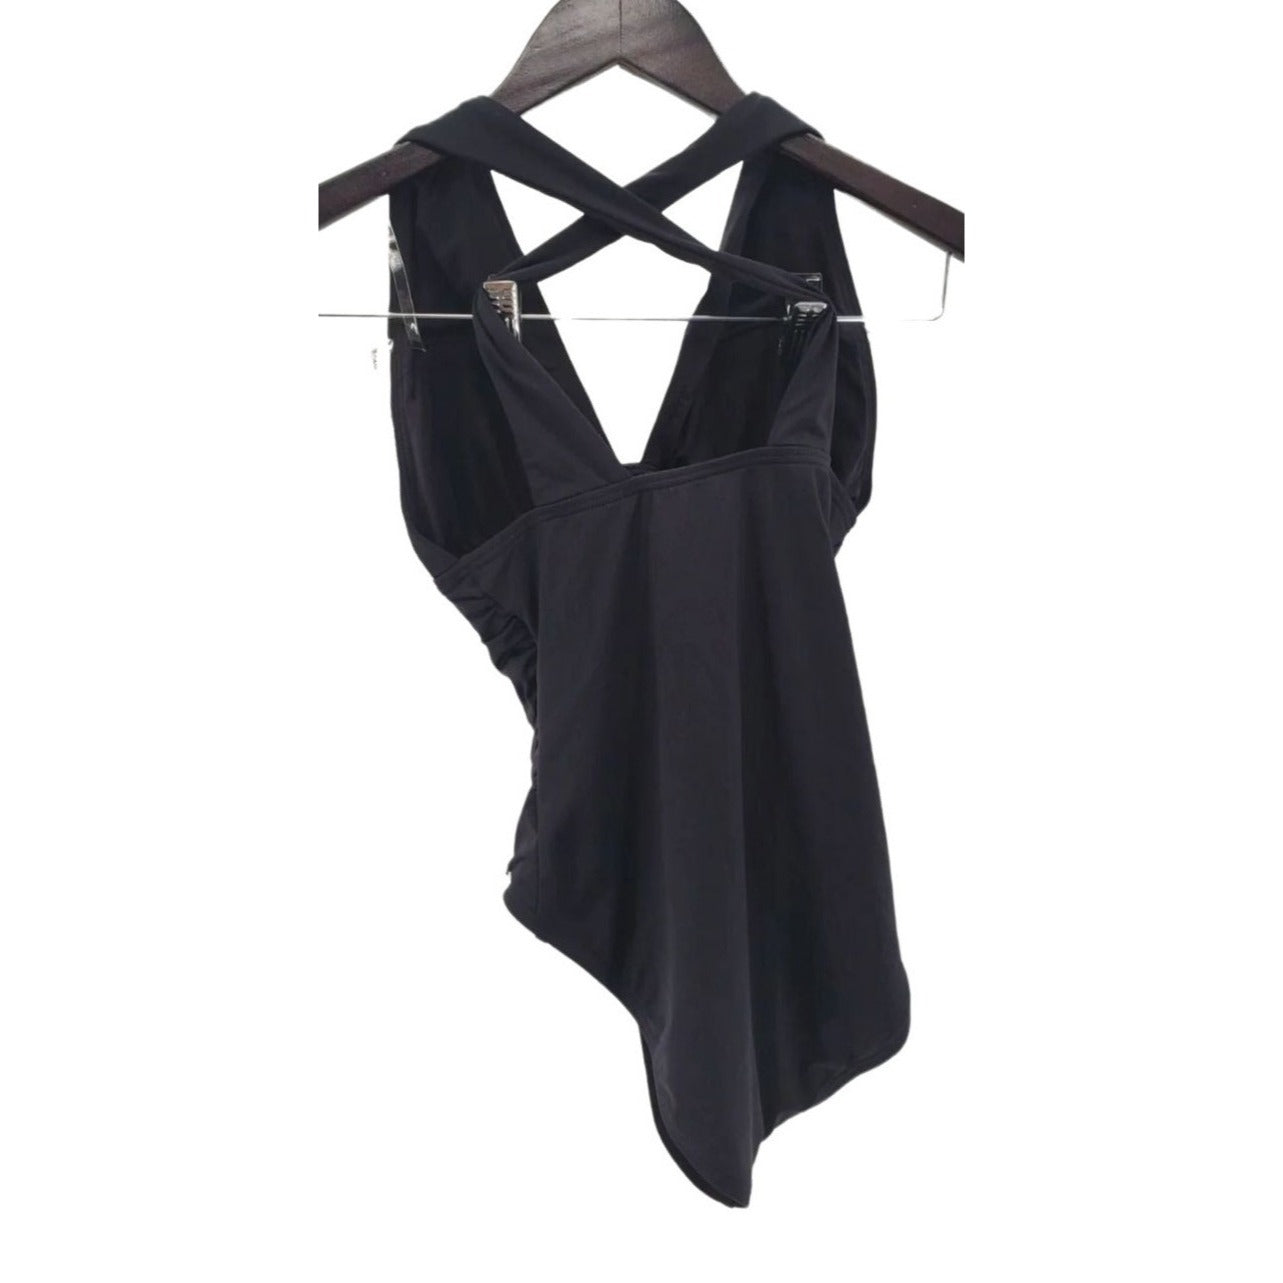 MICHAEL KORS One-piece Swimwear Convertible top Classic bathing suit